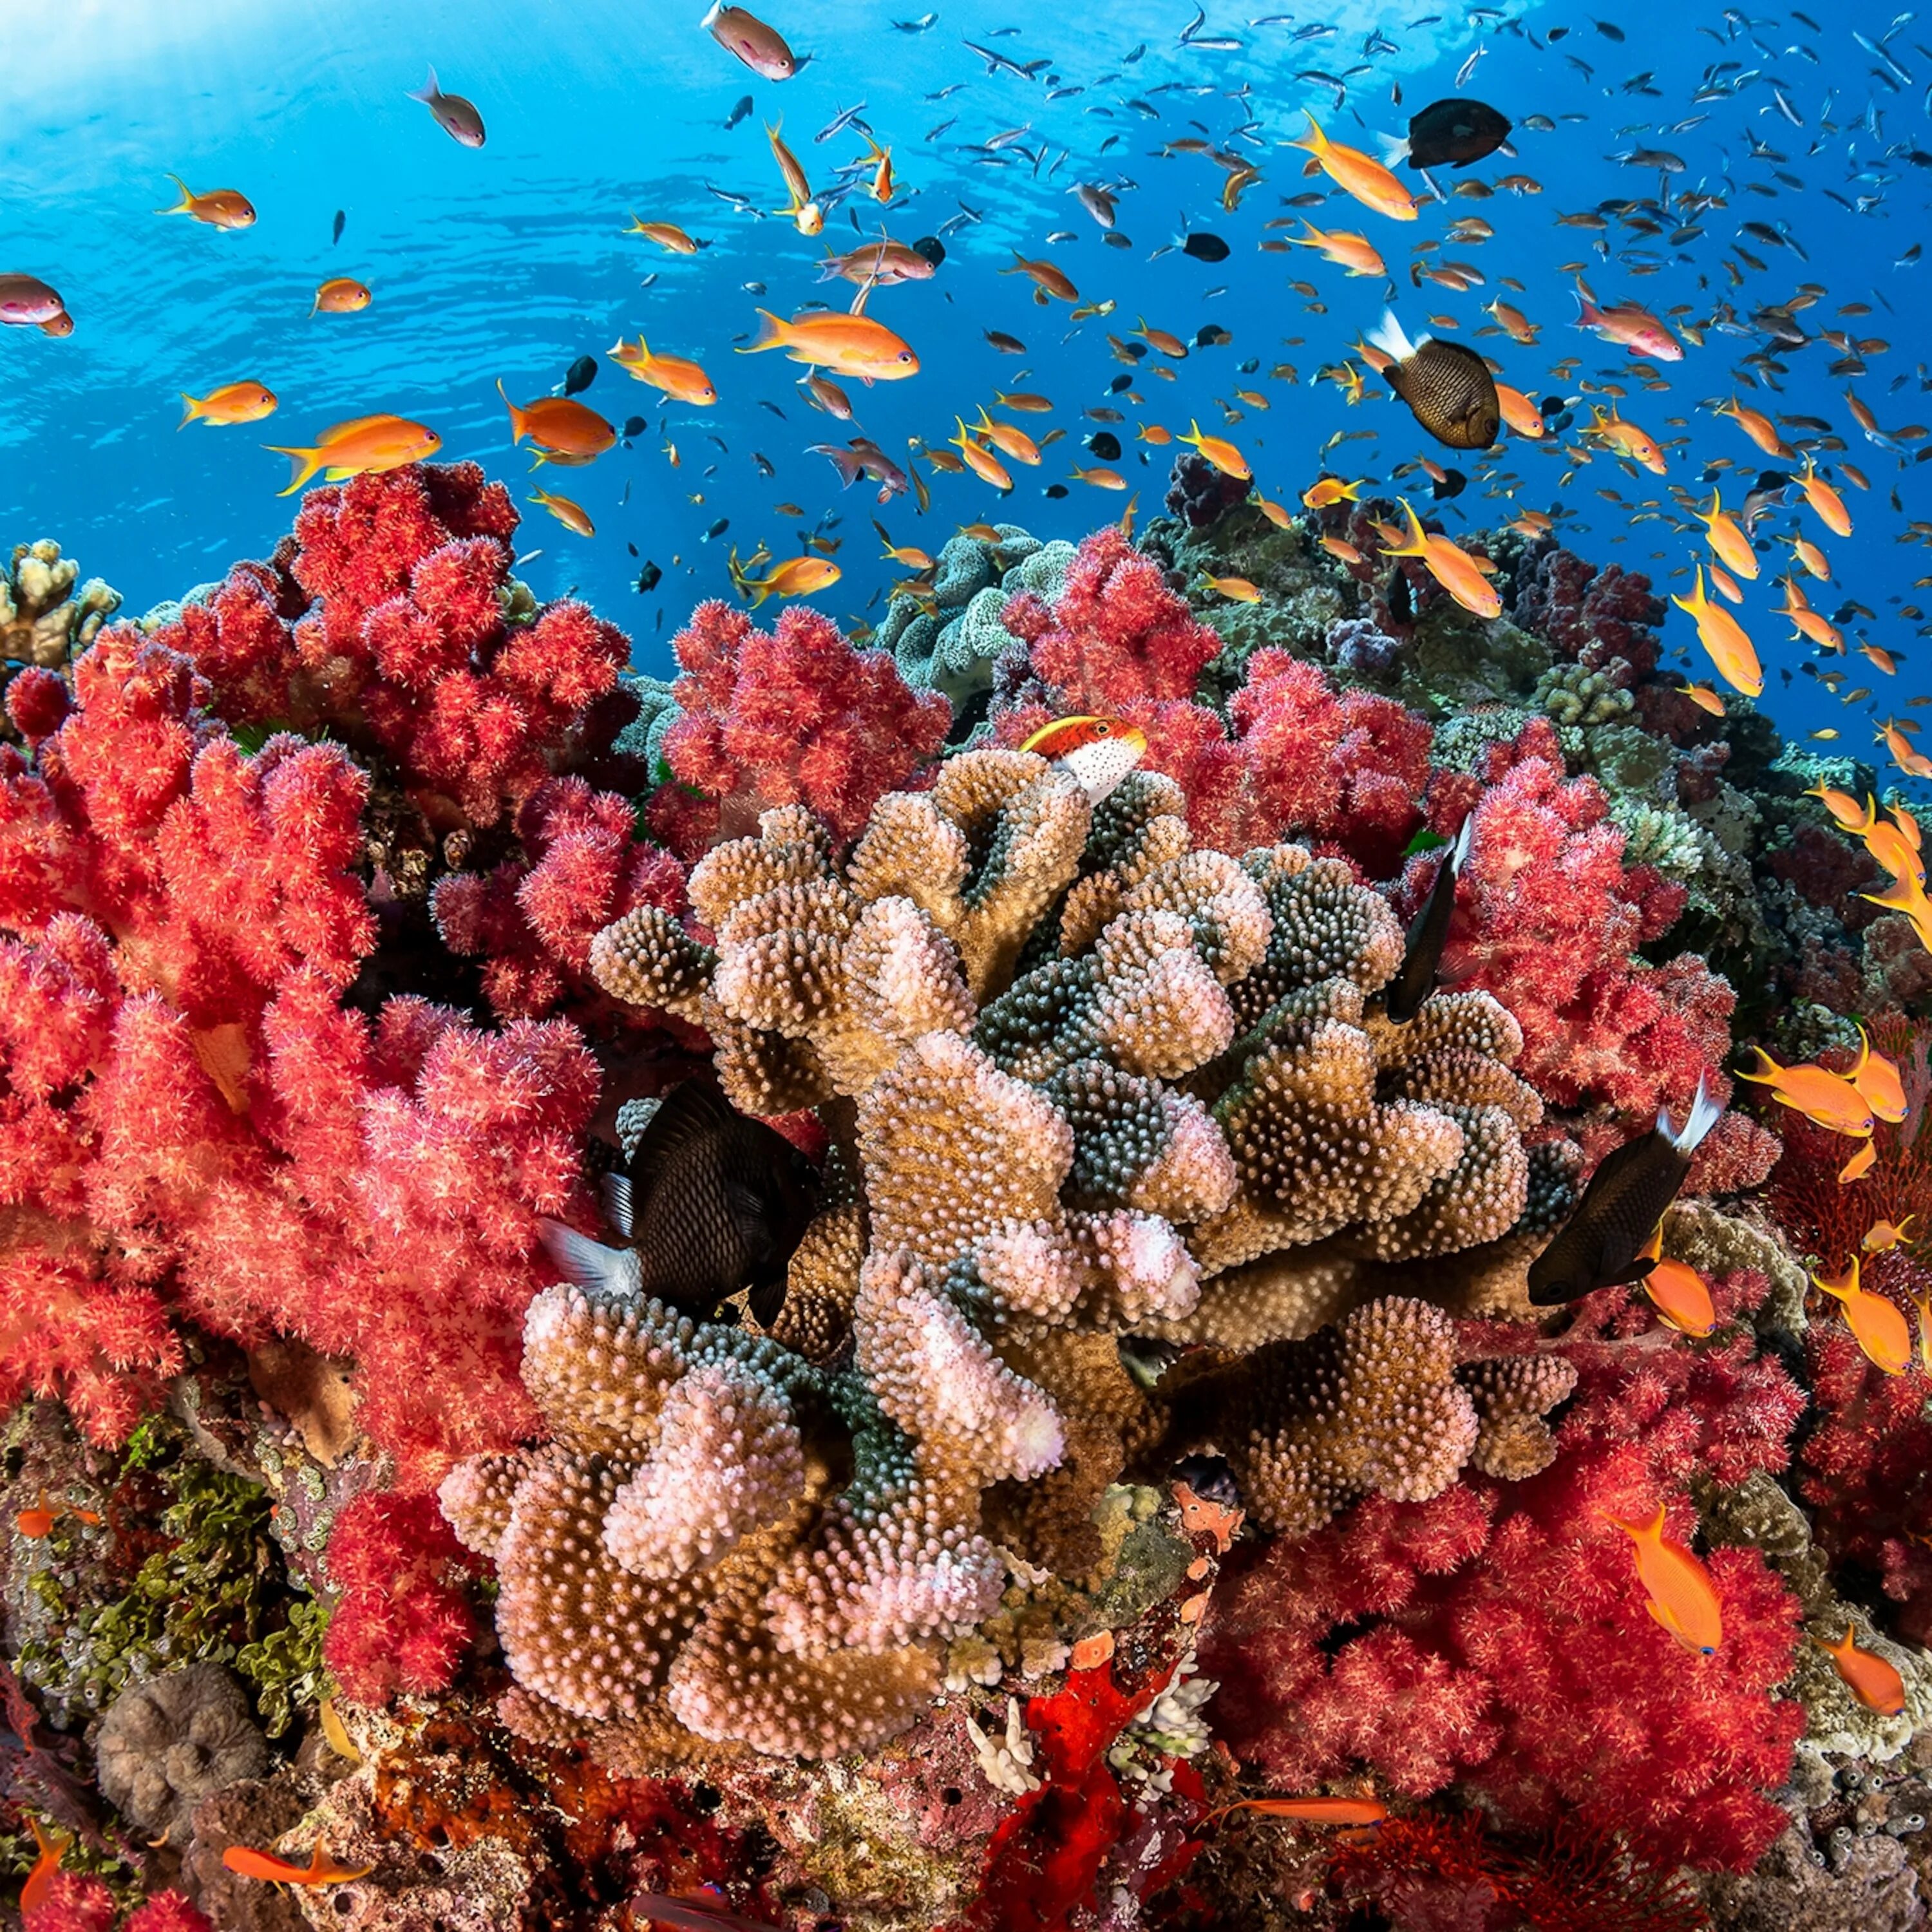 Coral video. Риф Туббатаха Филиппины. Коралловый Барьерный риф. Морской парк большого барьерного рифа. Большой Барьерный риф коралловые полипы Австралия.